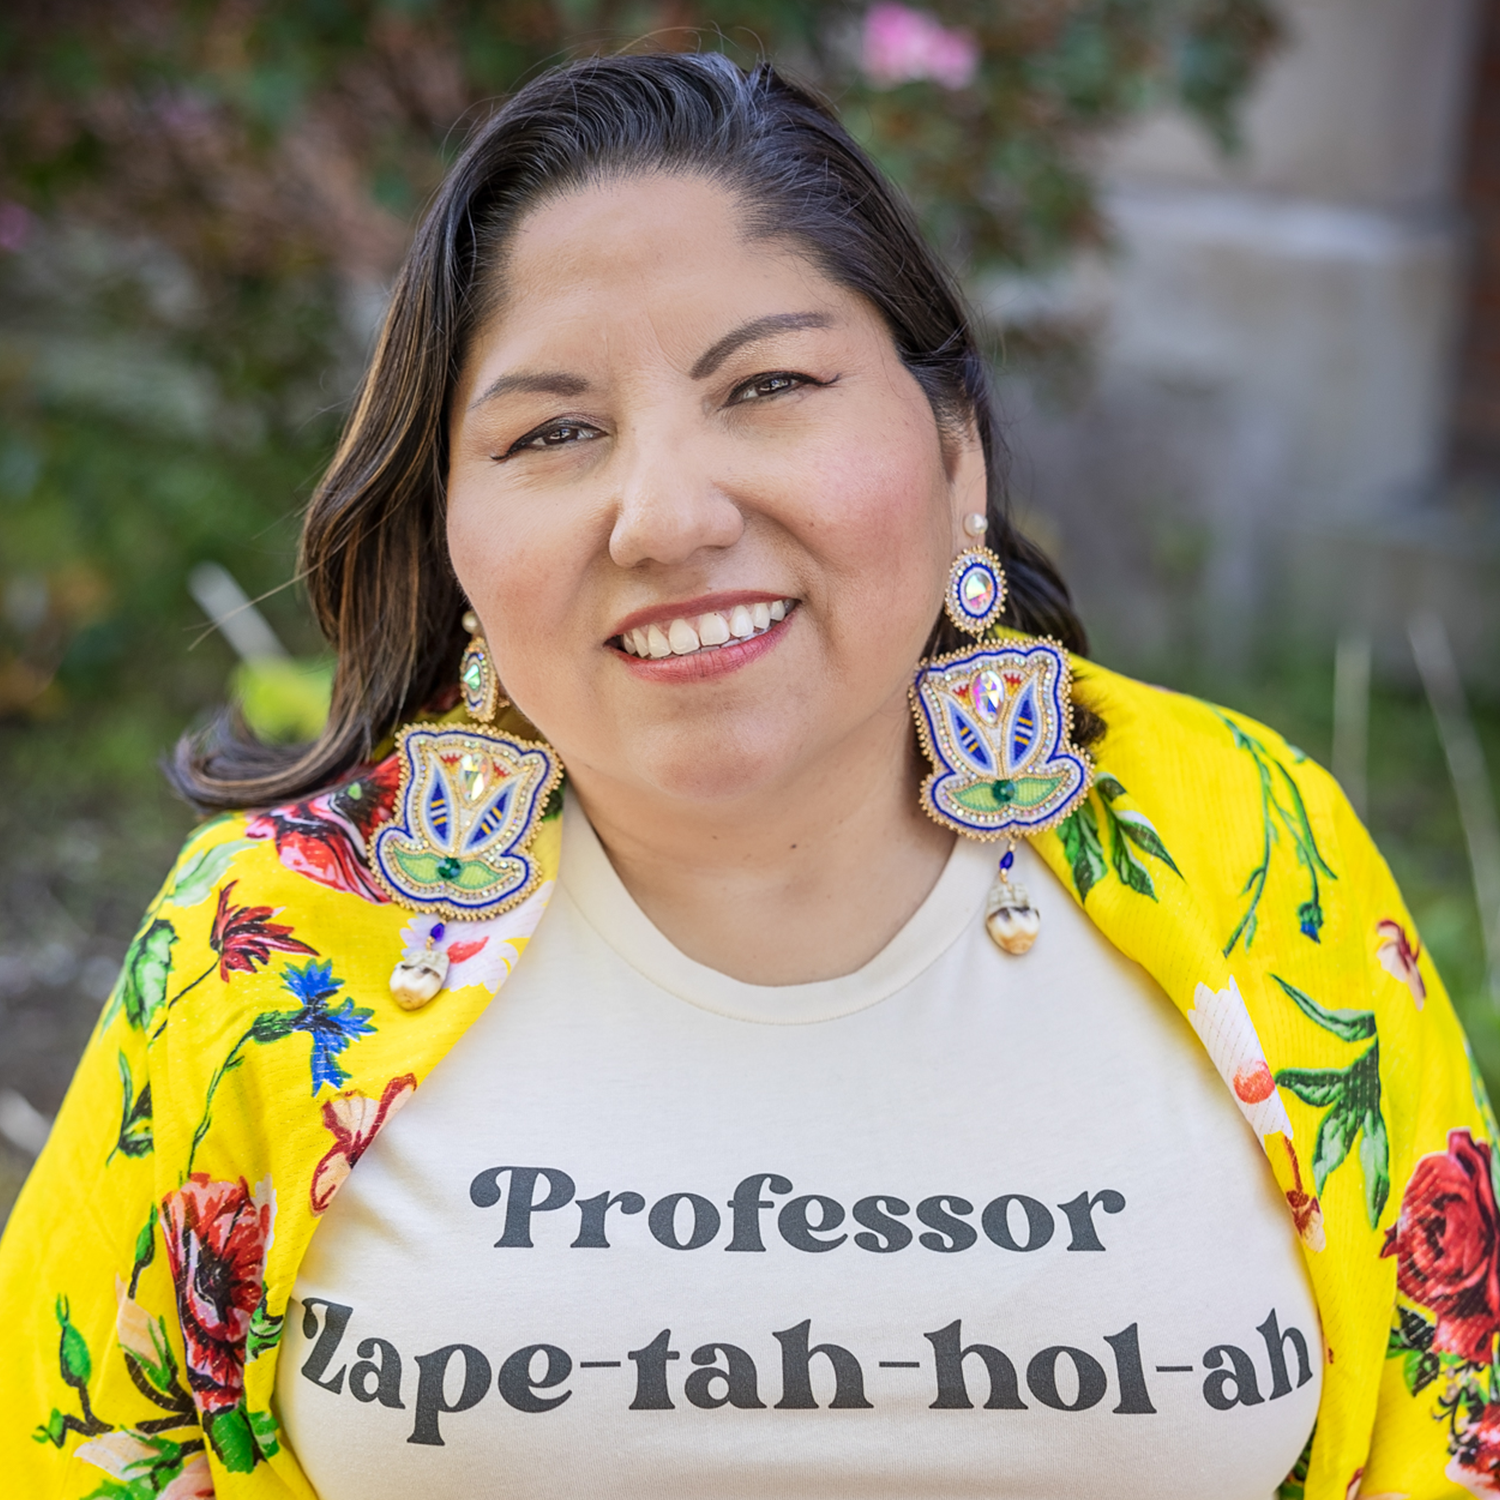 woman in bright yellow top, decoratve native earings wearing a shirt that says Professor Zape-tah-hol-ah